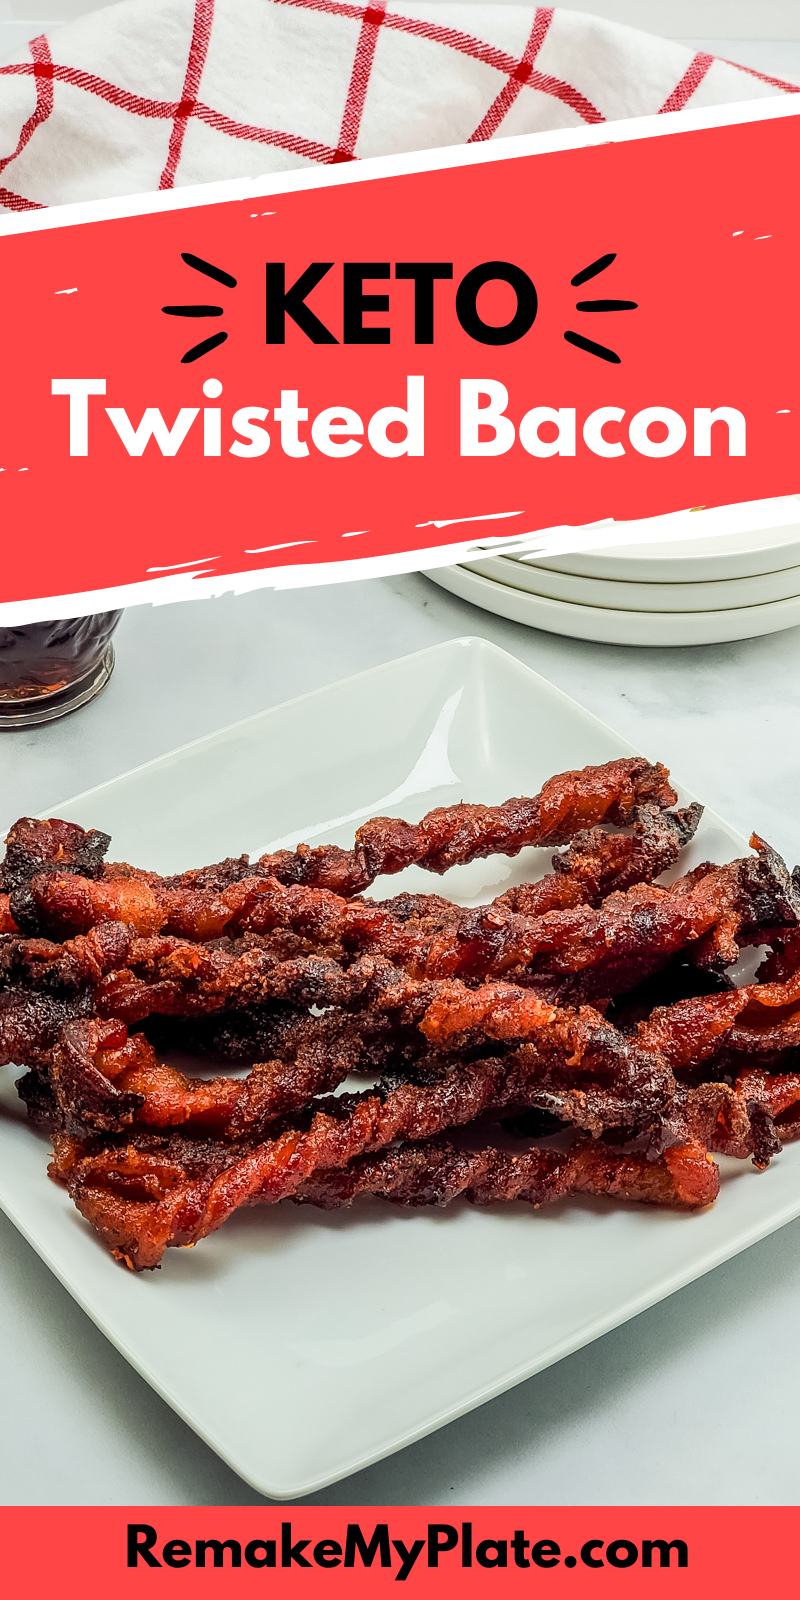 Keto twisted bacon 3 1